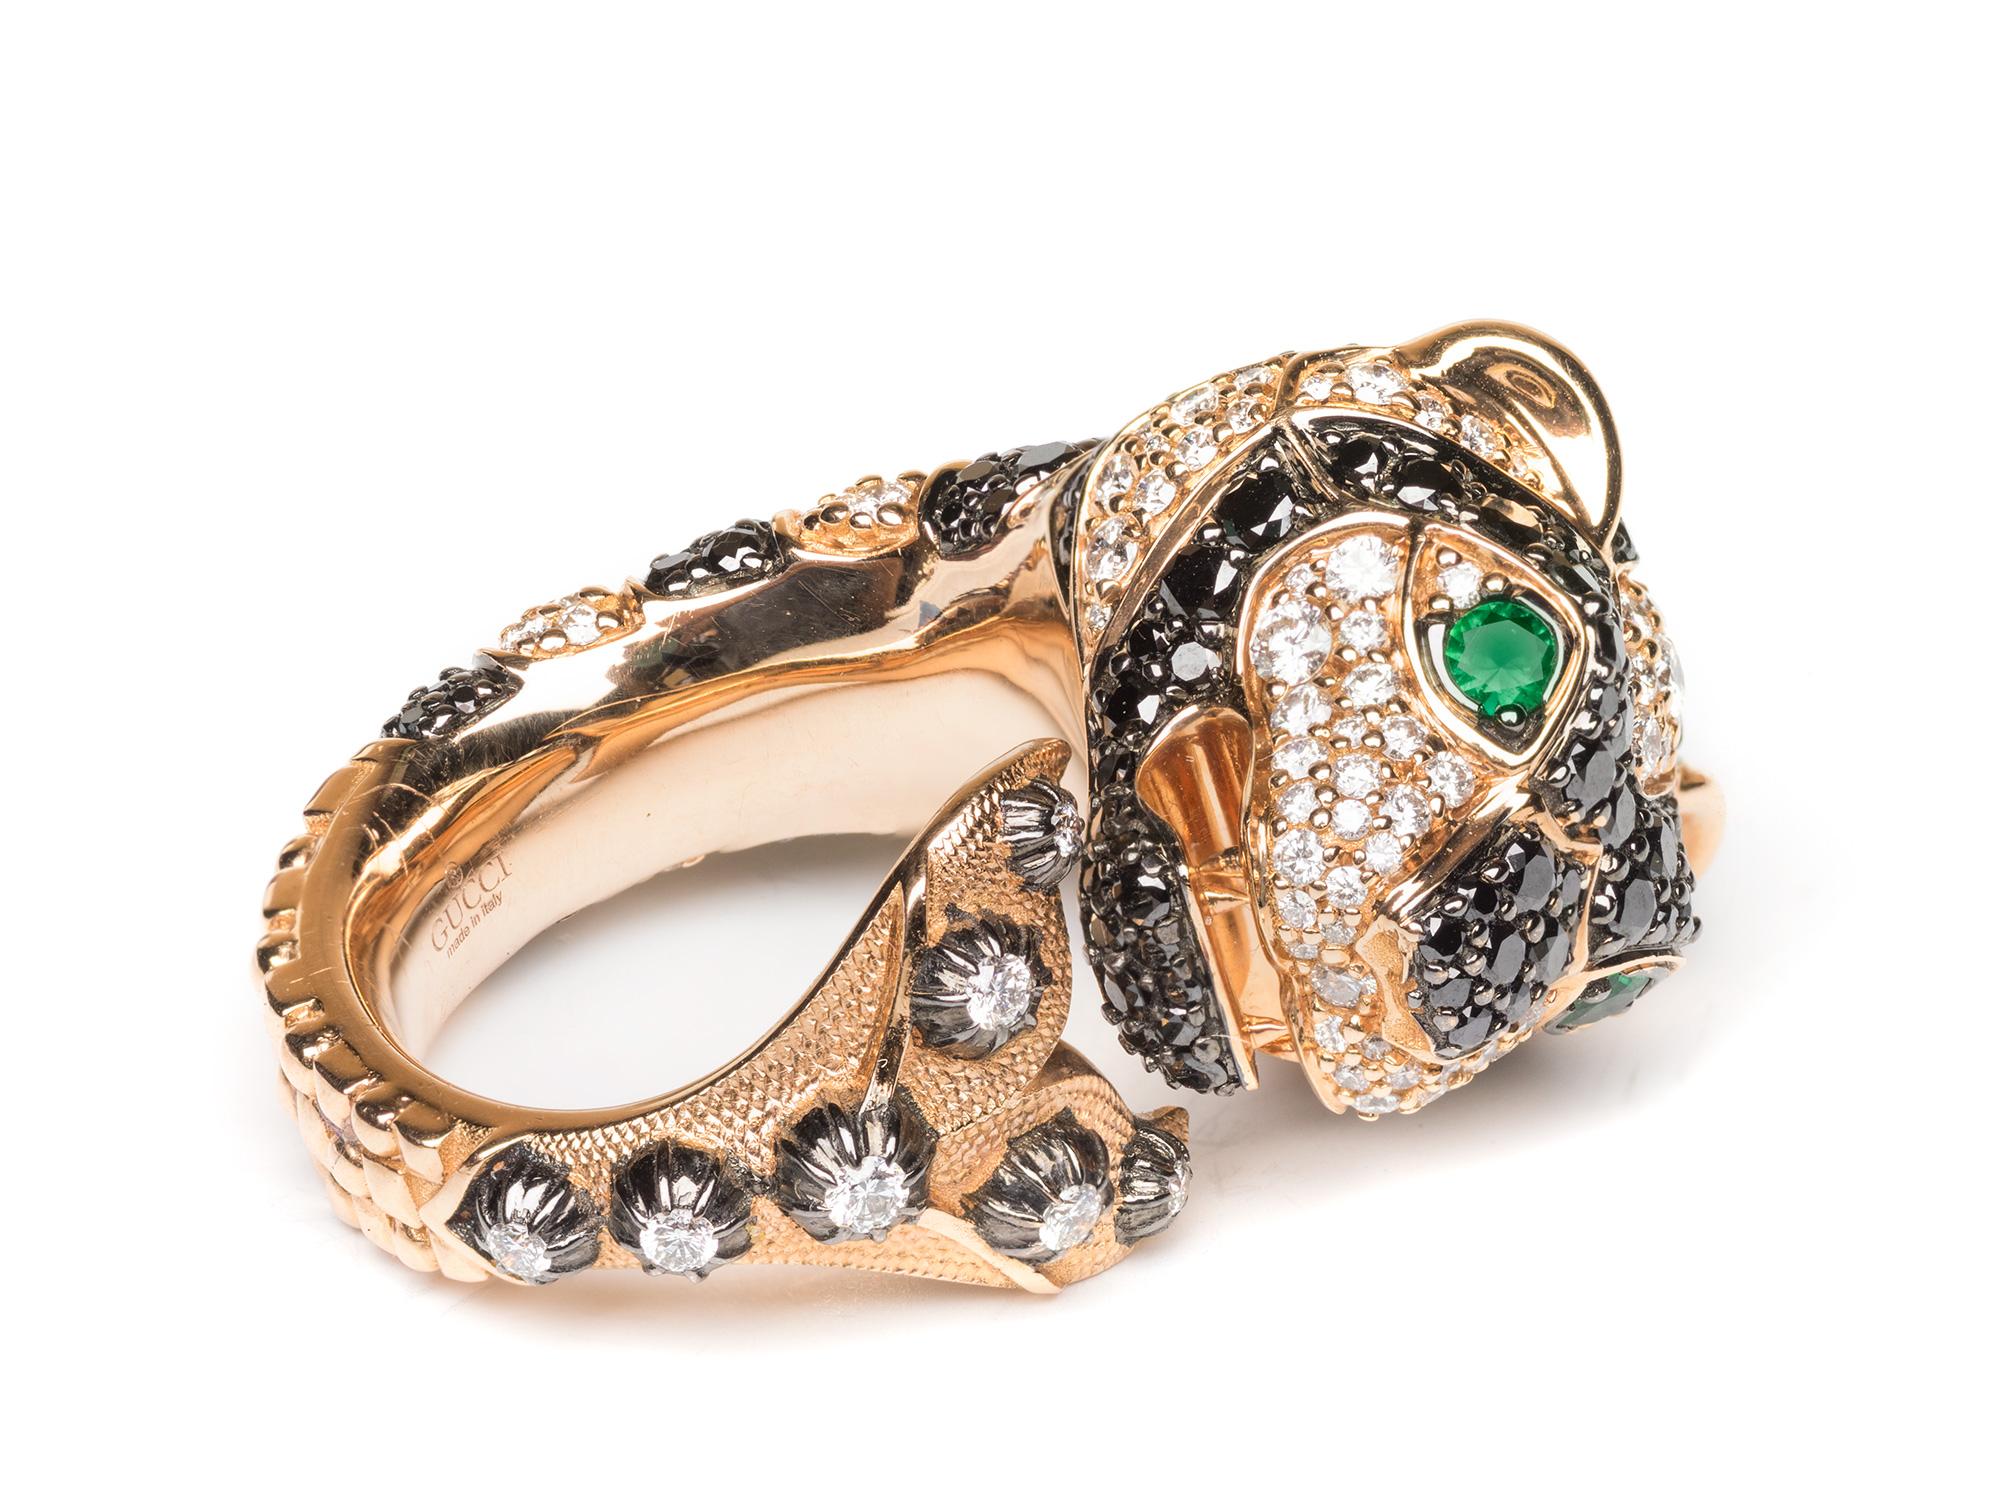 
Gucci Le Marche des Merveilles Diamond/Emerald Tiger Ring set in 18k rose gold.  